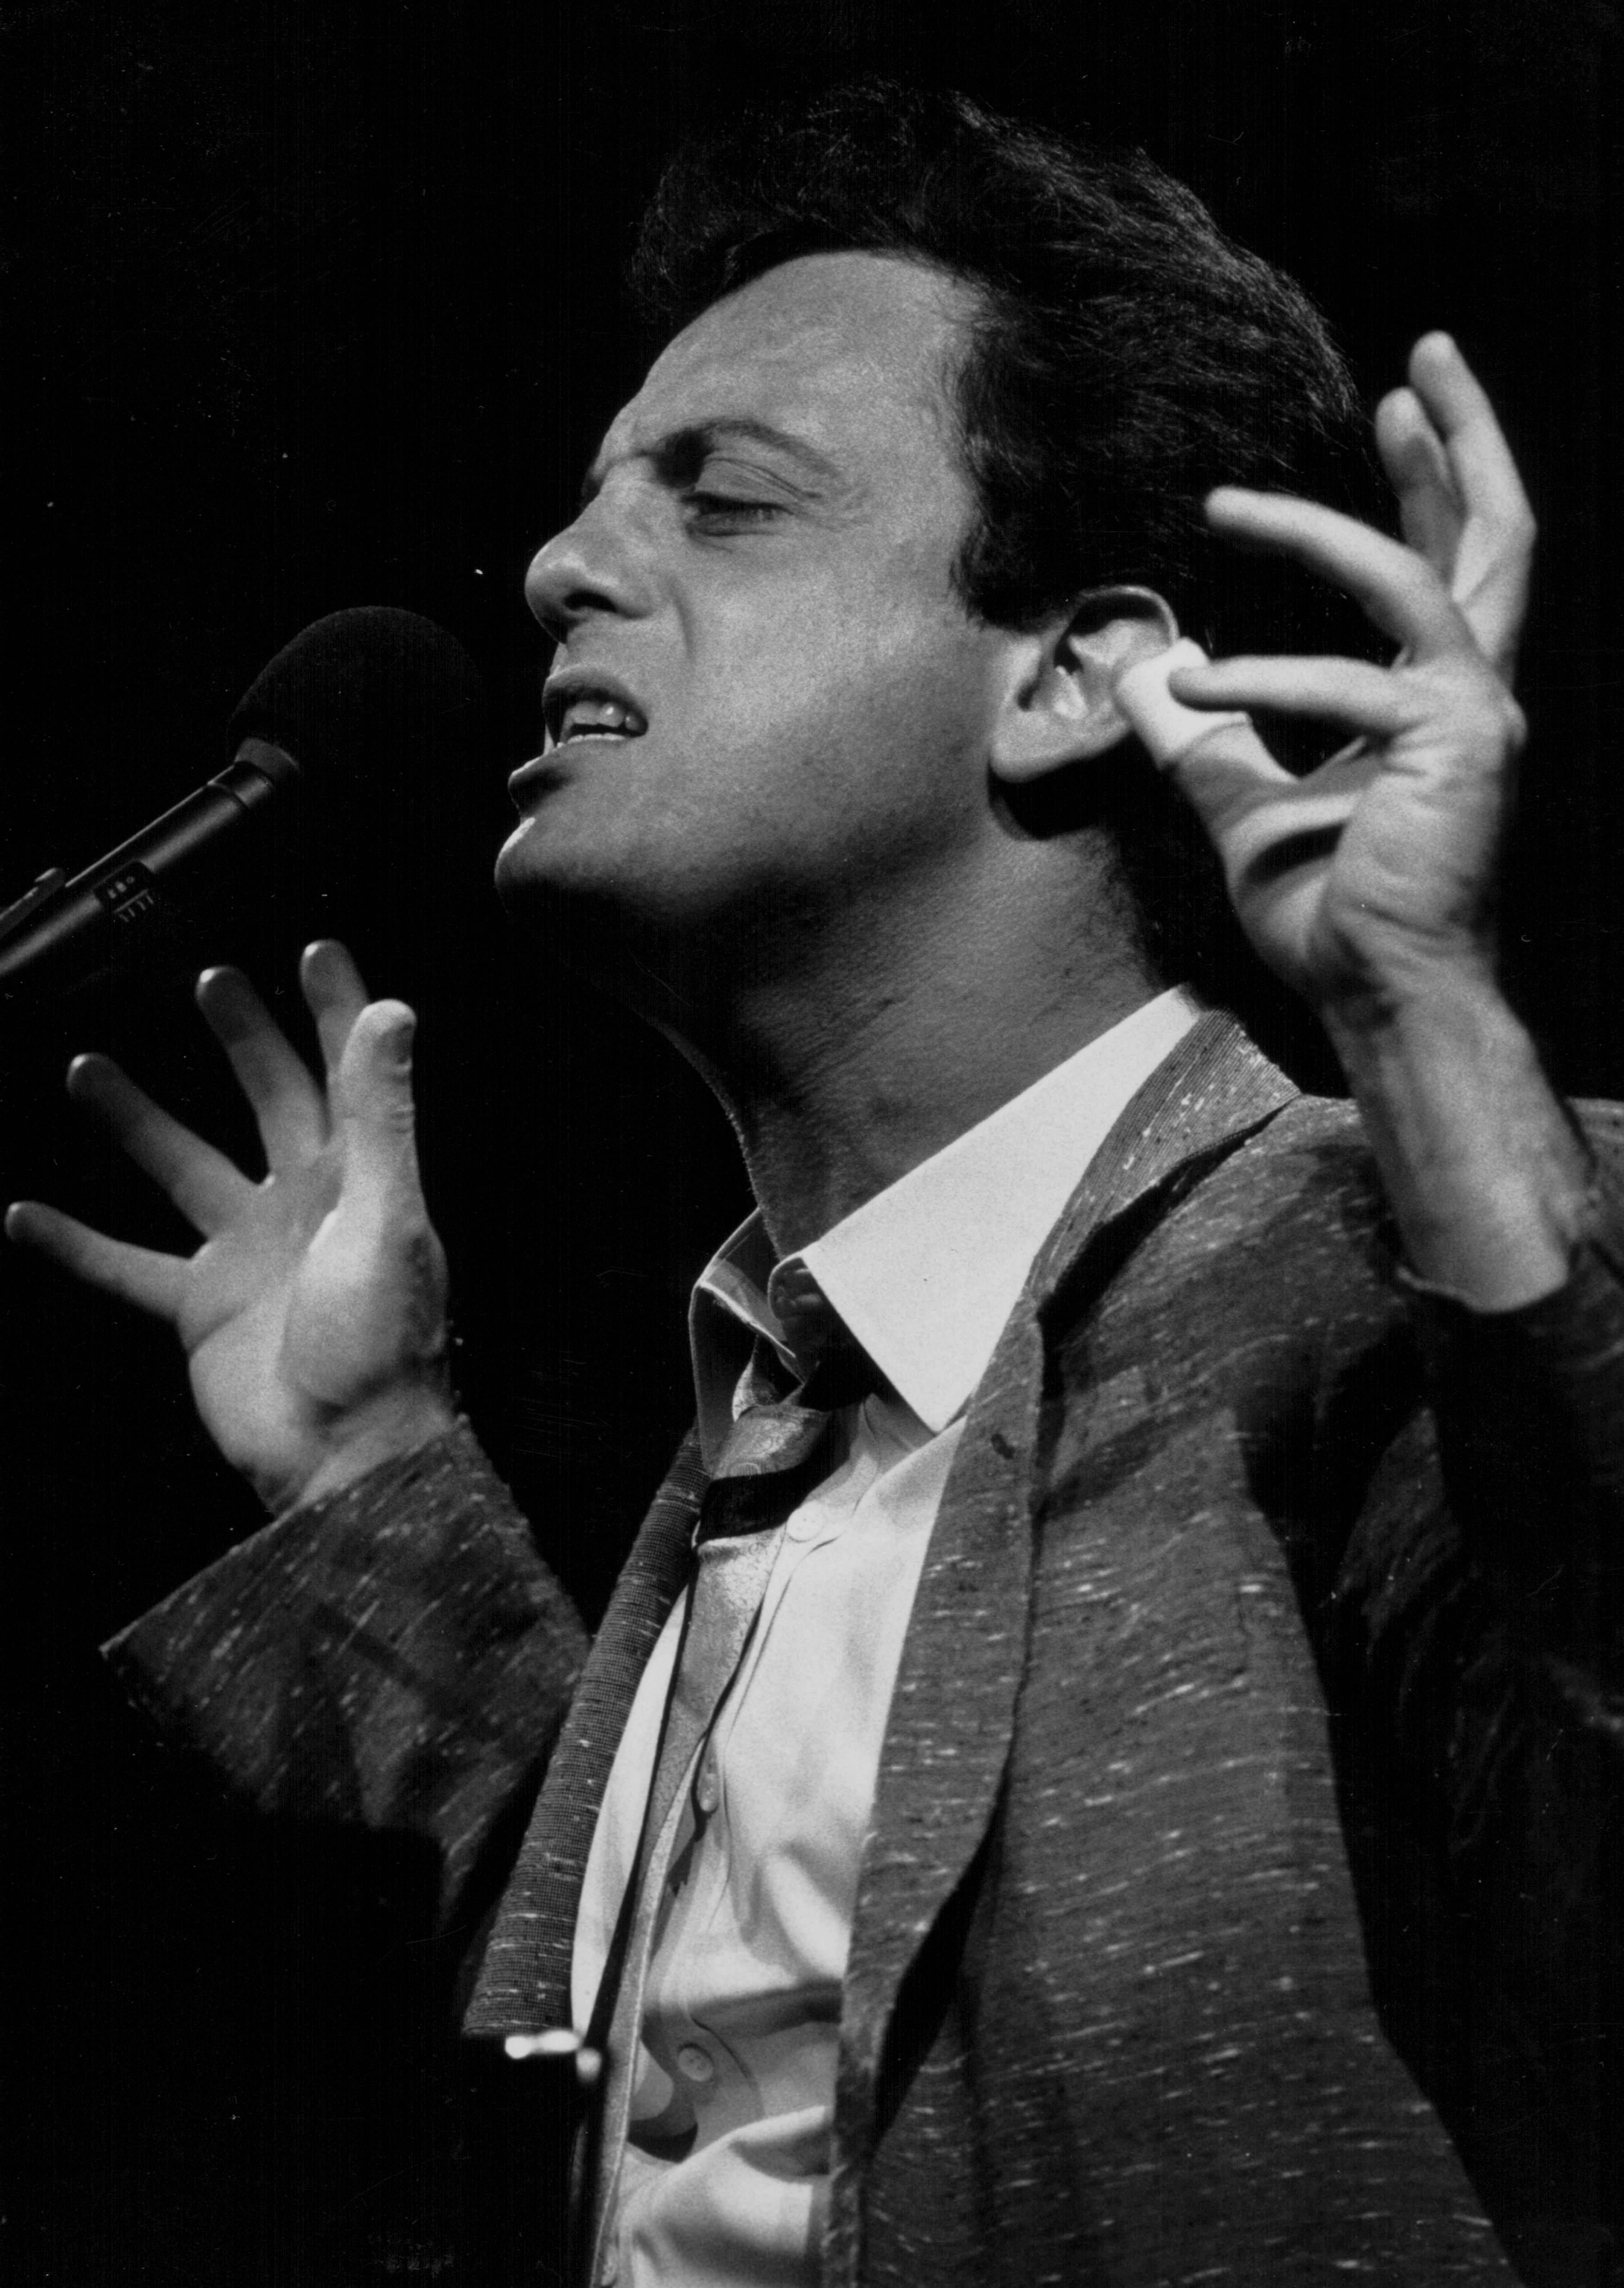 Billy Joel sur scène, vers 1980-1990 | Source : Getty Images